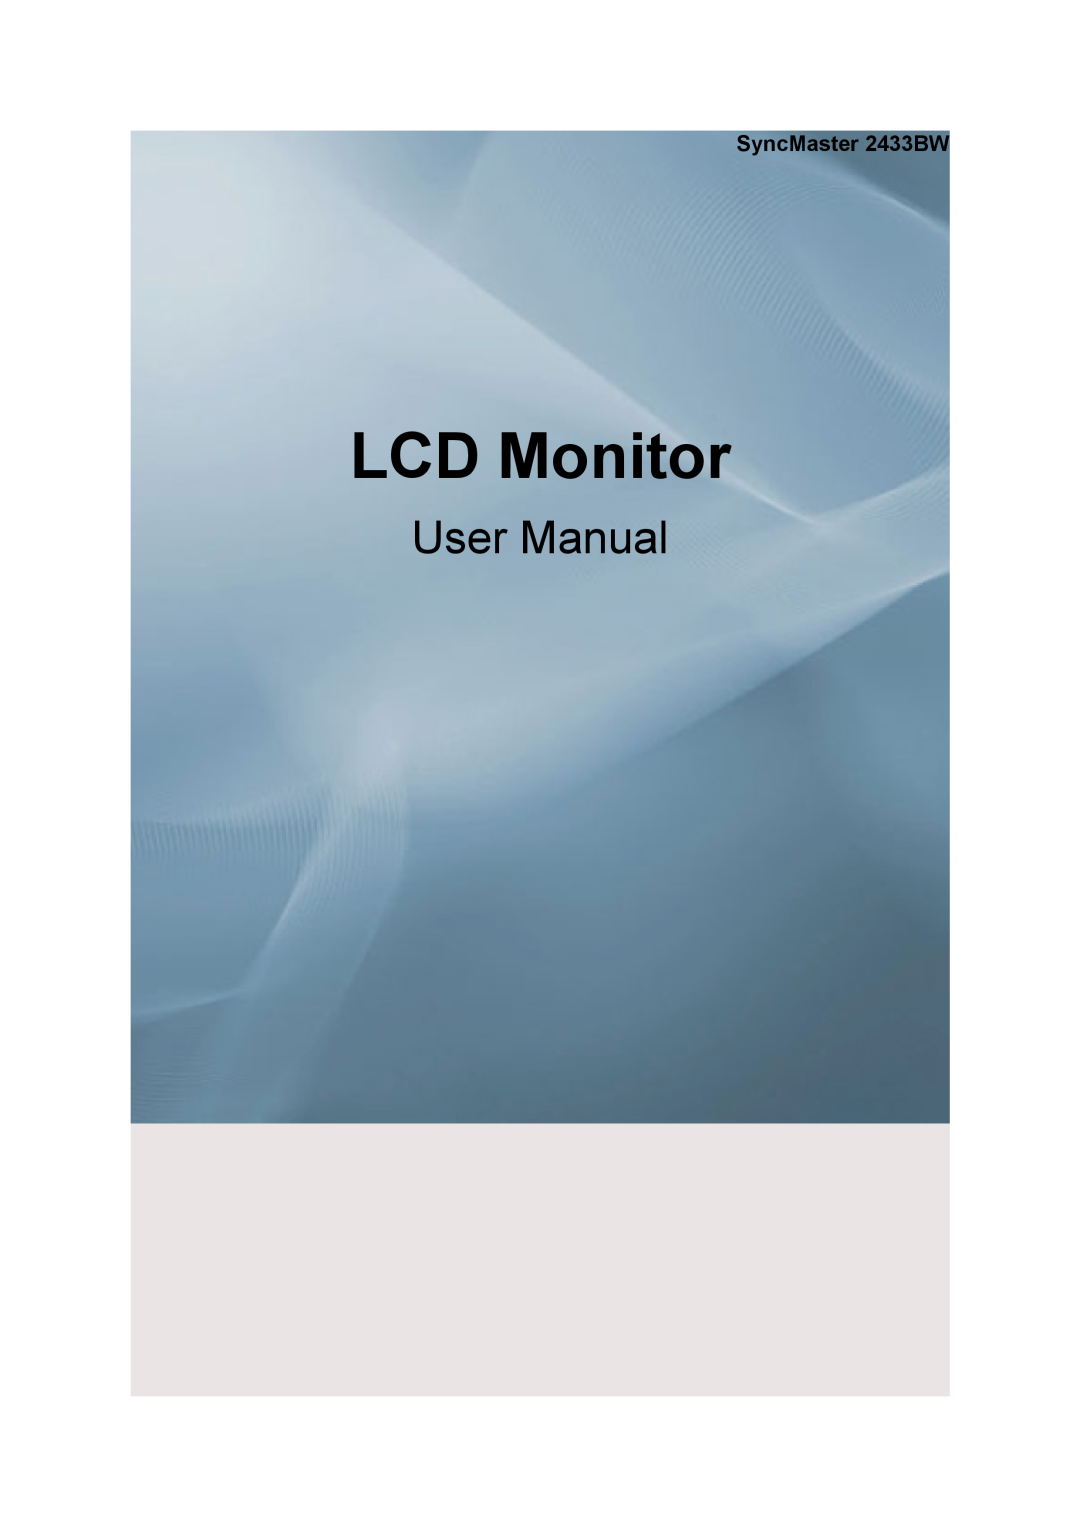 Samsung user manual SyncMaster 2433BW, LCD Monitor, User Manual 